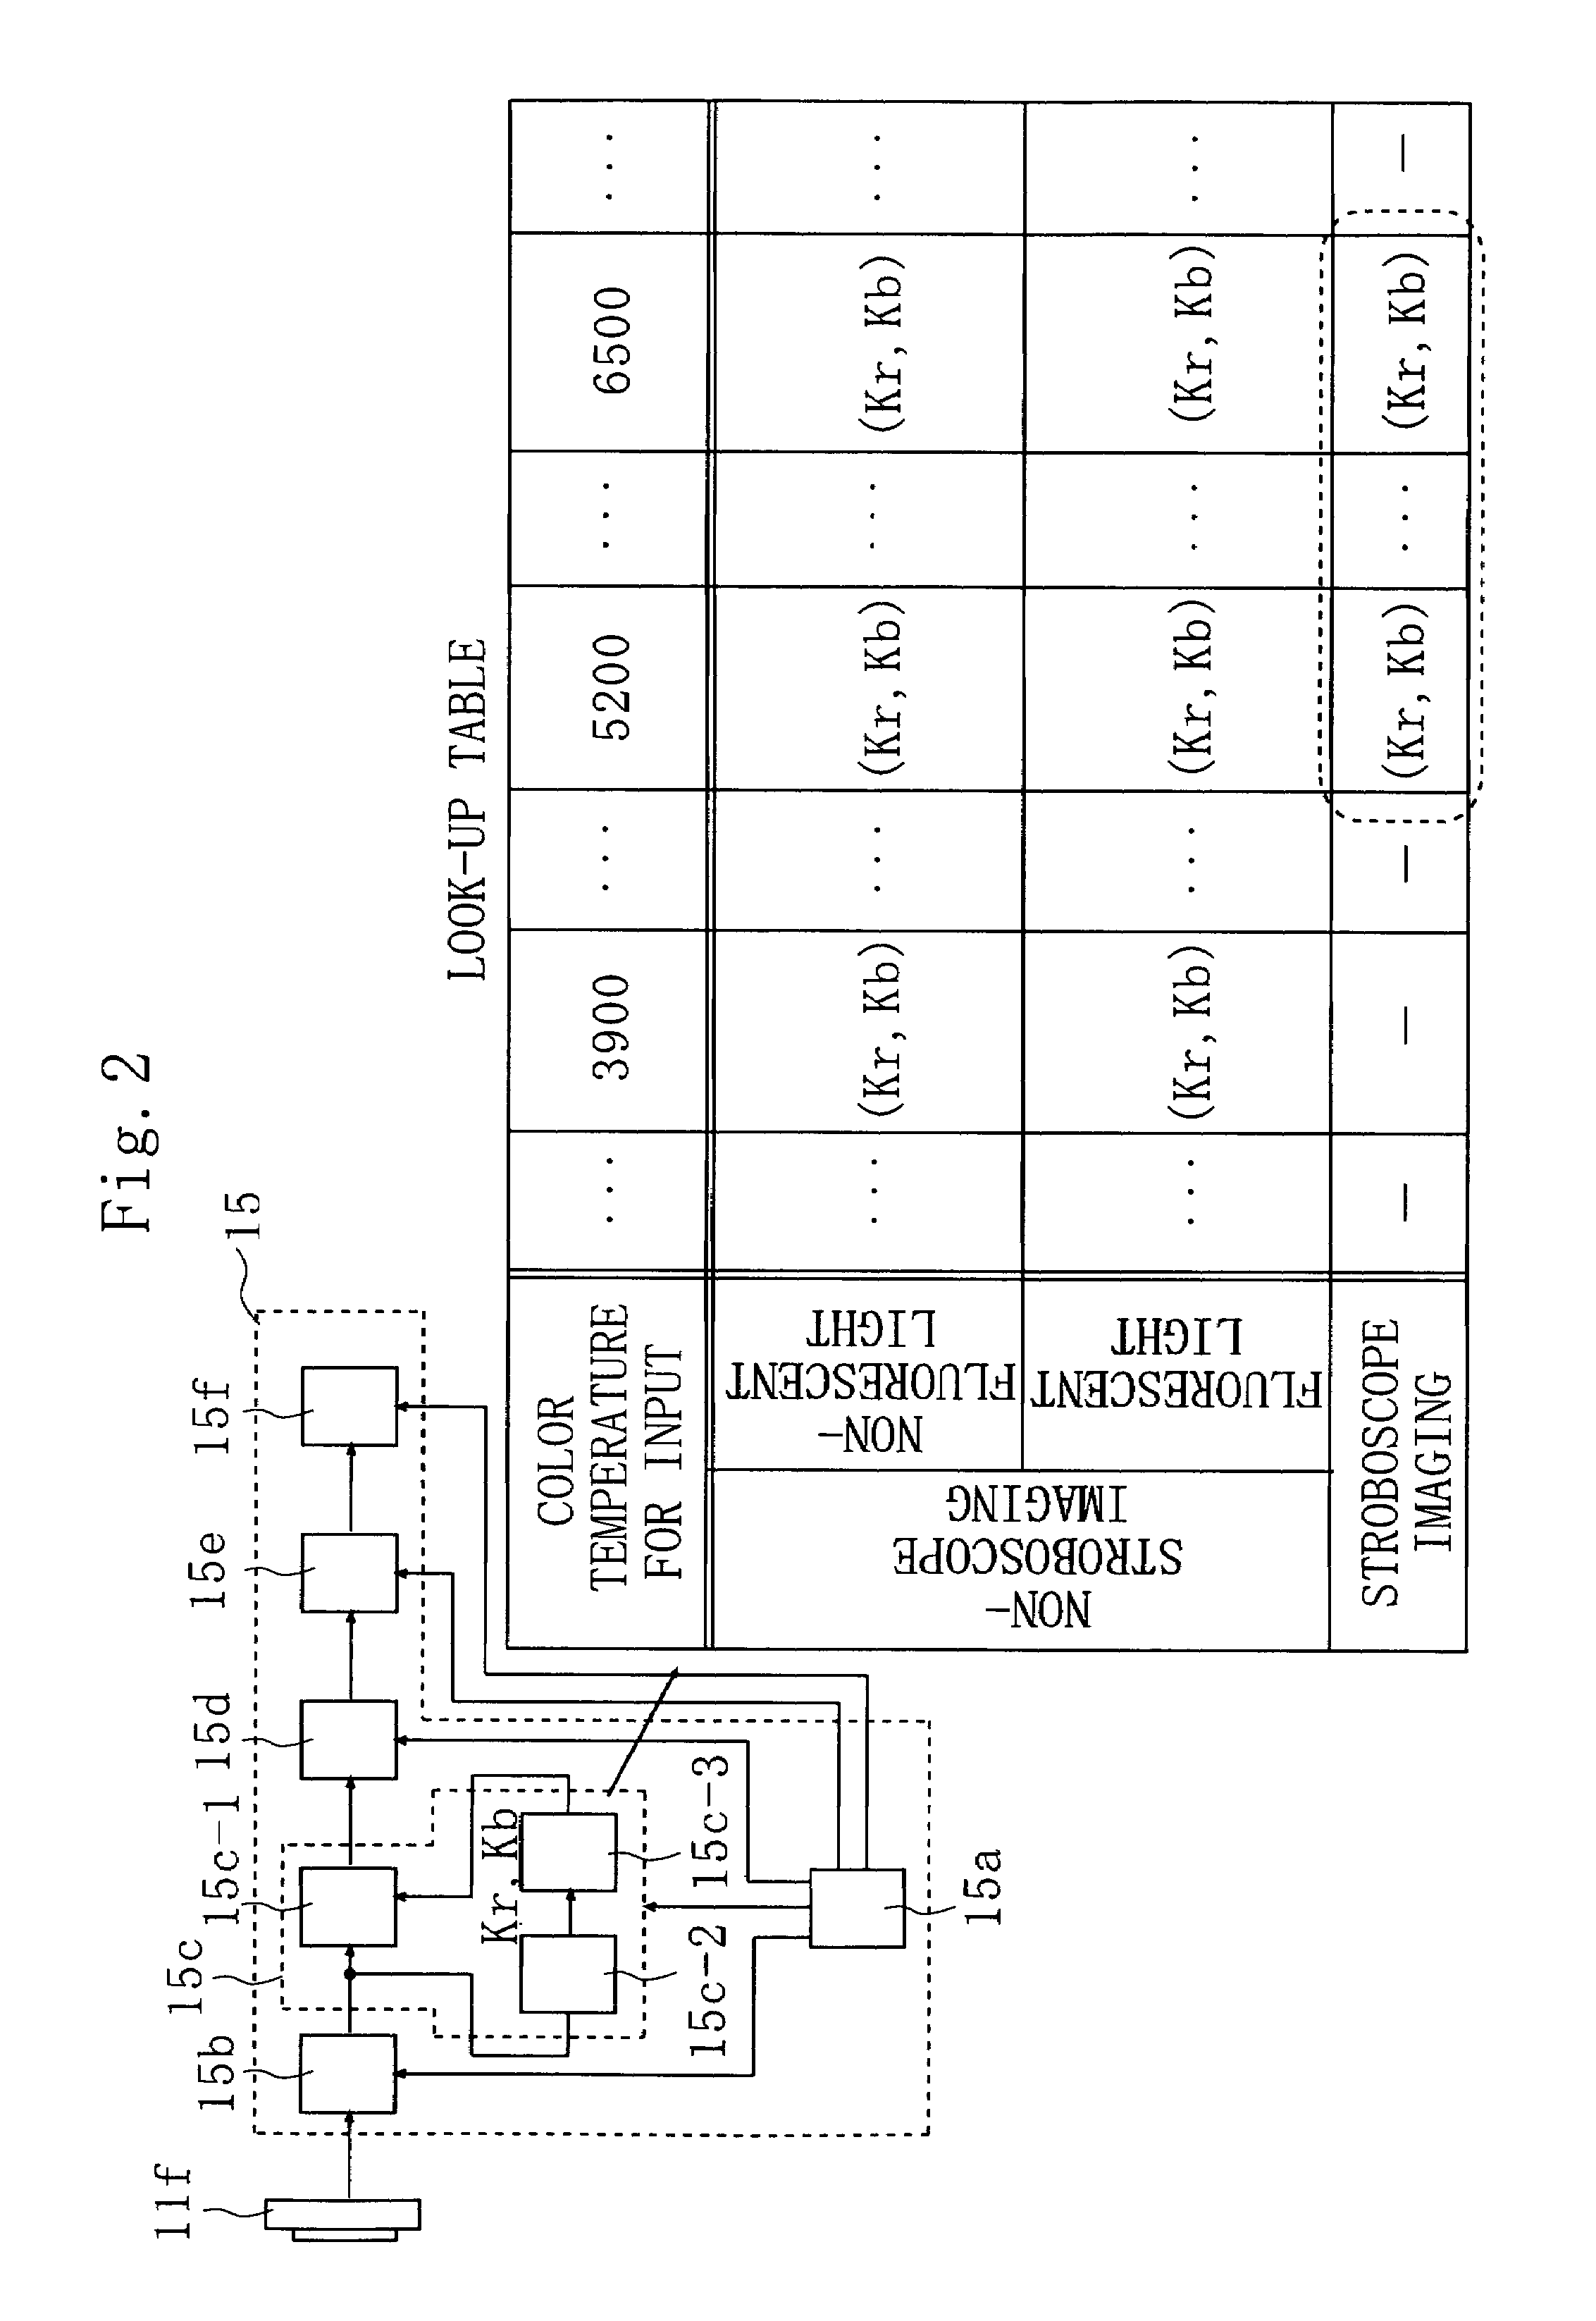 Electronic camera and white balance correction circuit